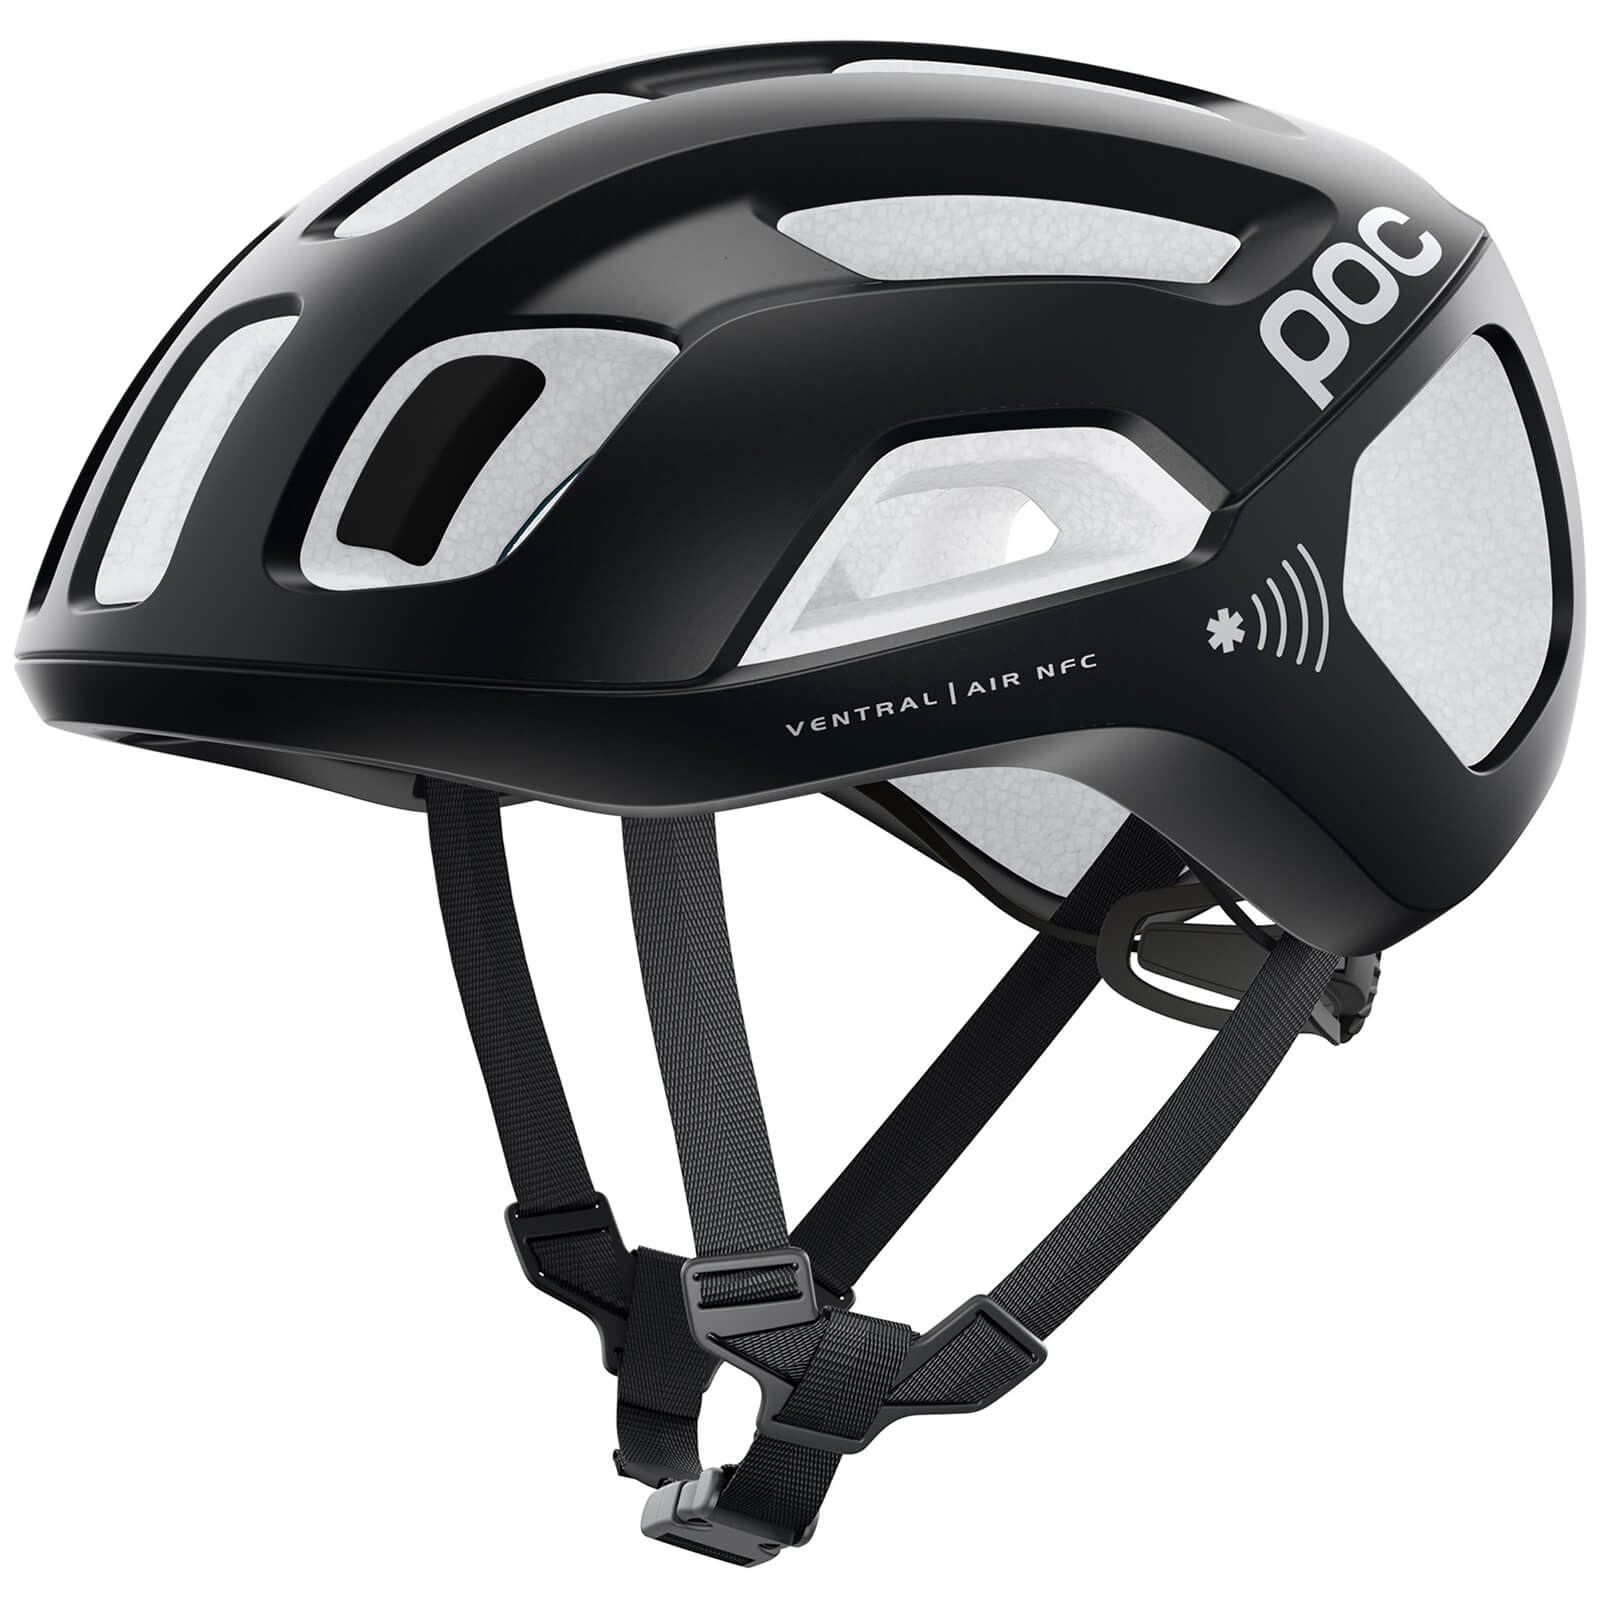 POC Ventral Air SPIN NFC Road Helmet - M/54cm-59cm